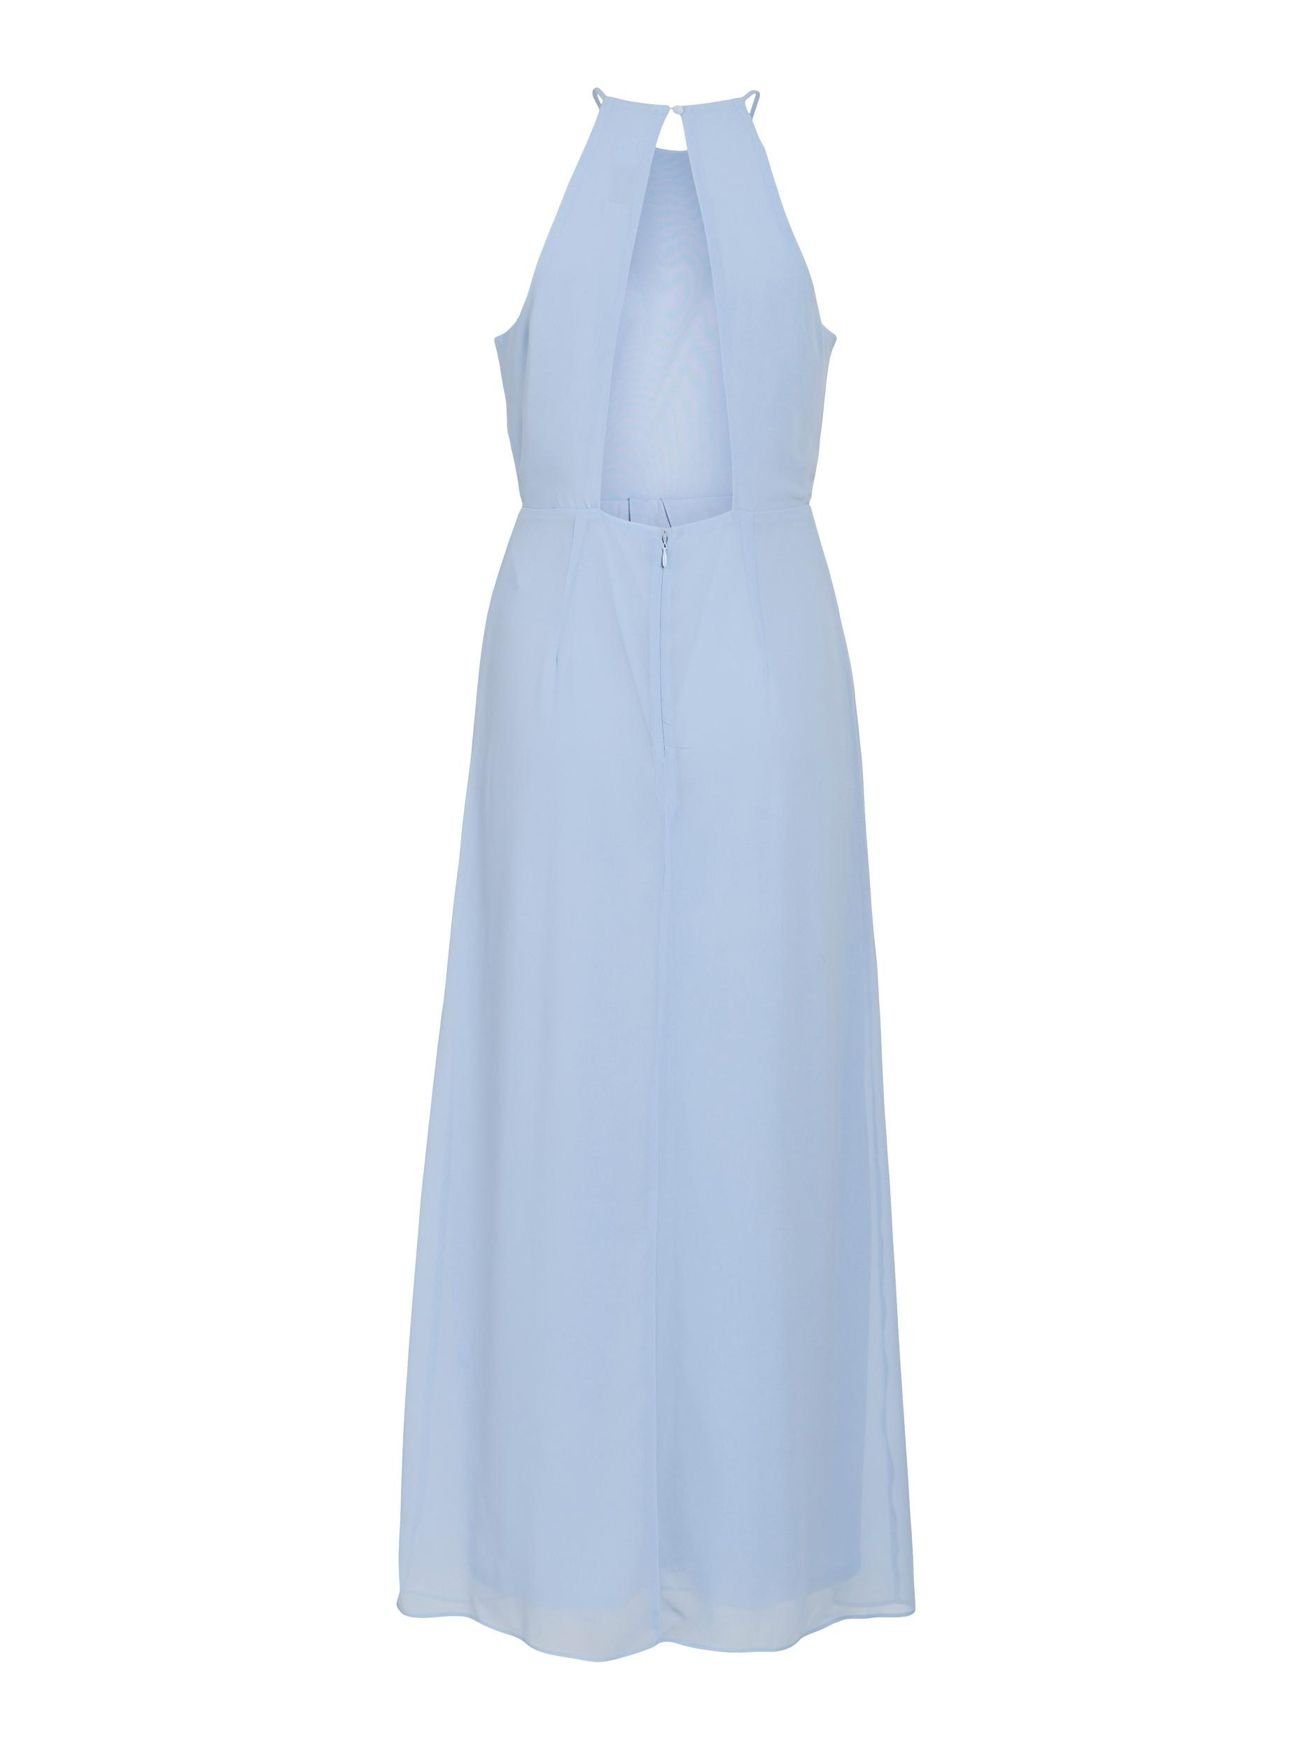 Kleid Abschluss 5478 VIMILINA (lang) Dress Shirtkleid Hochzeitsgast Blue Blau Vila in Kentucky Maxi